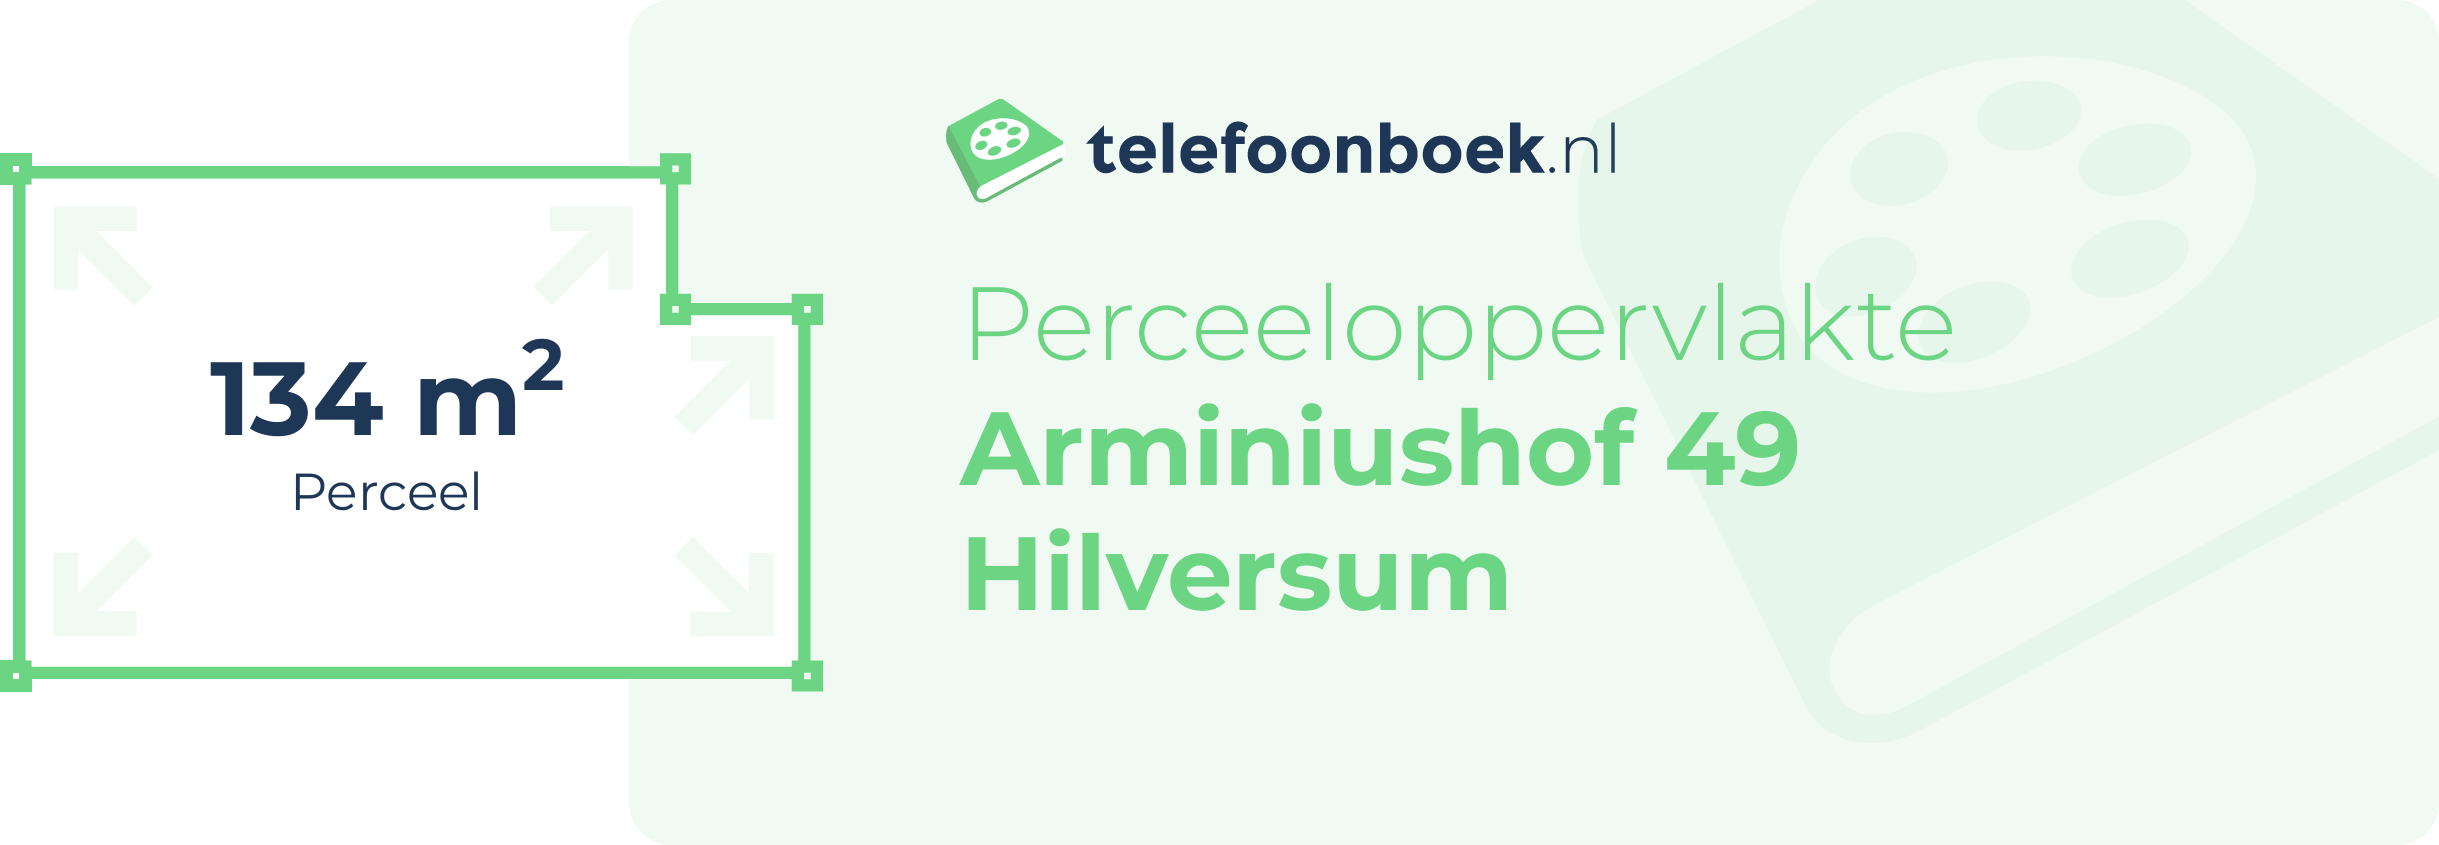 Perceeloppervlakte Arminiushof 49 Hilversum